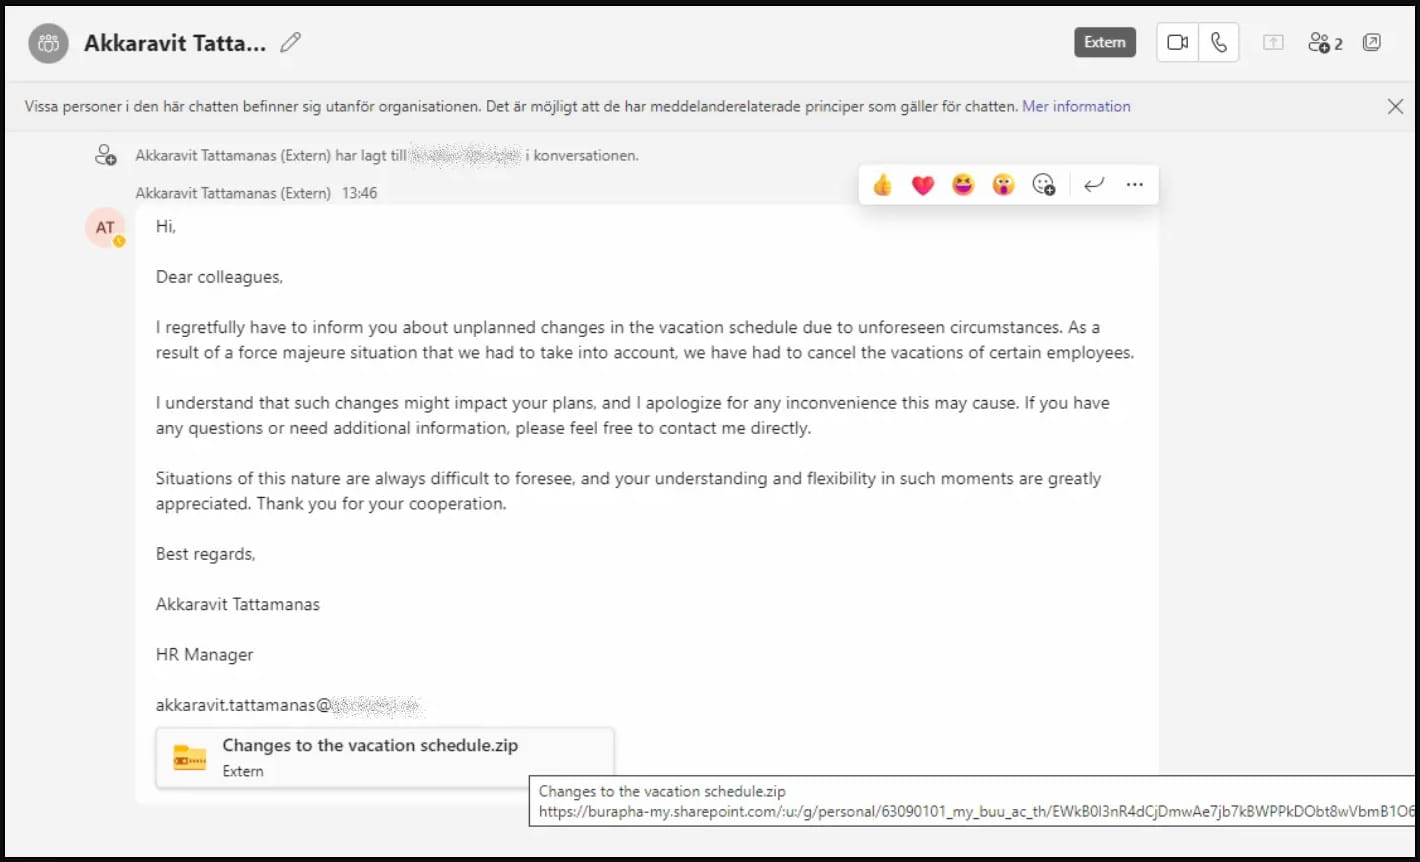 Phishing message sent to targets